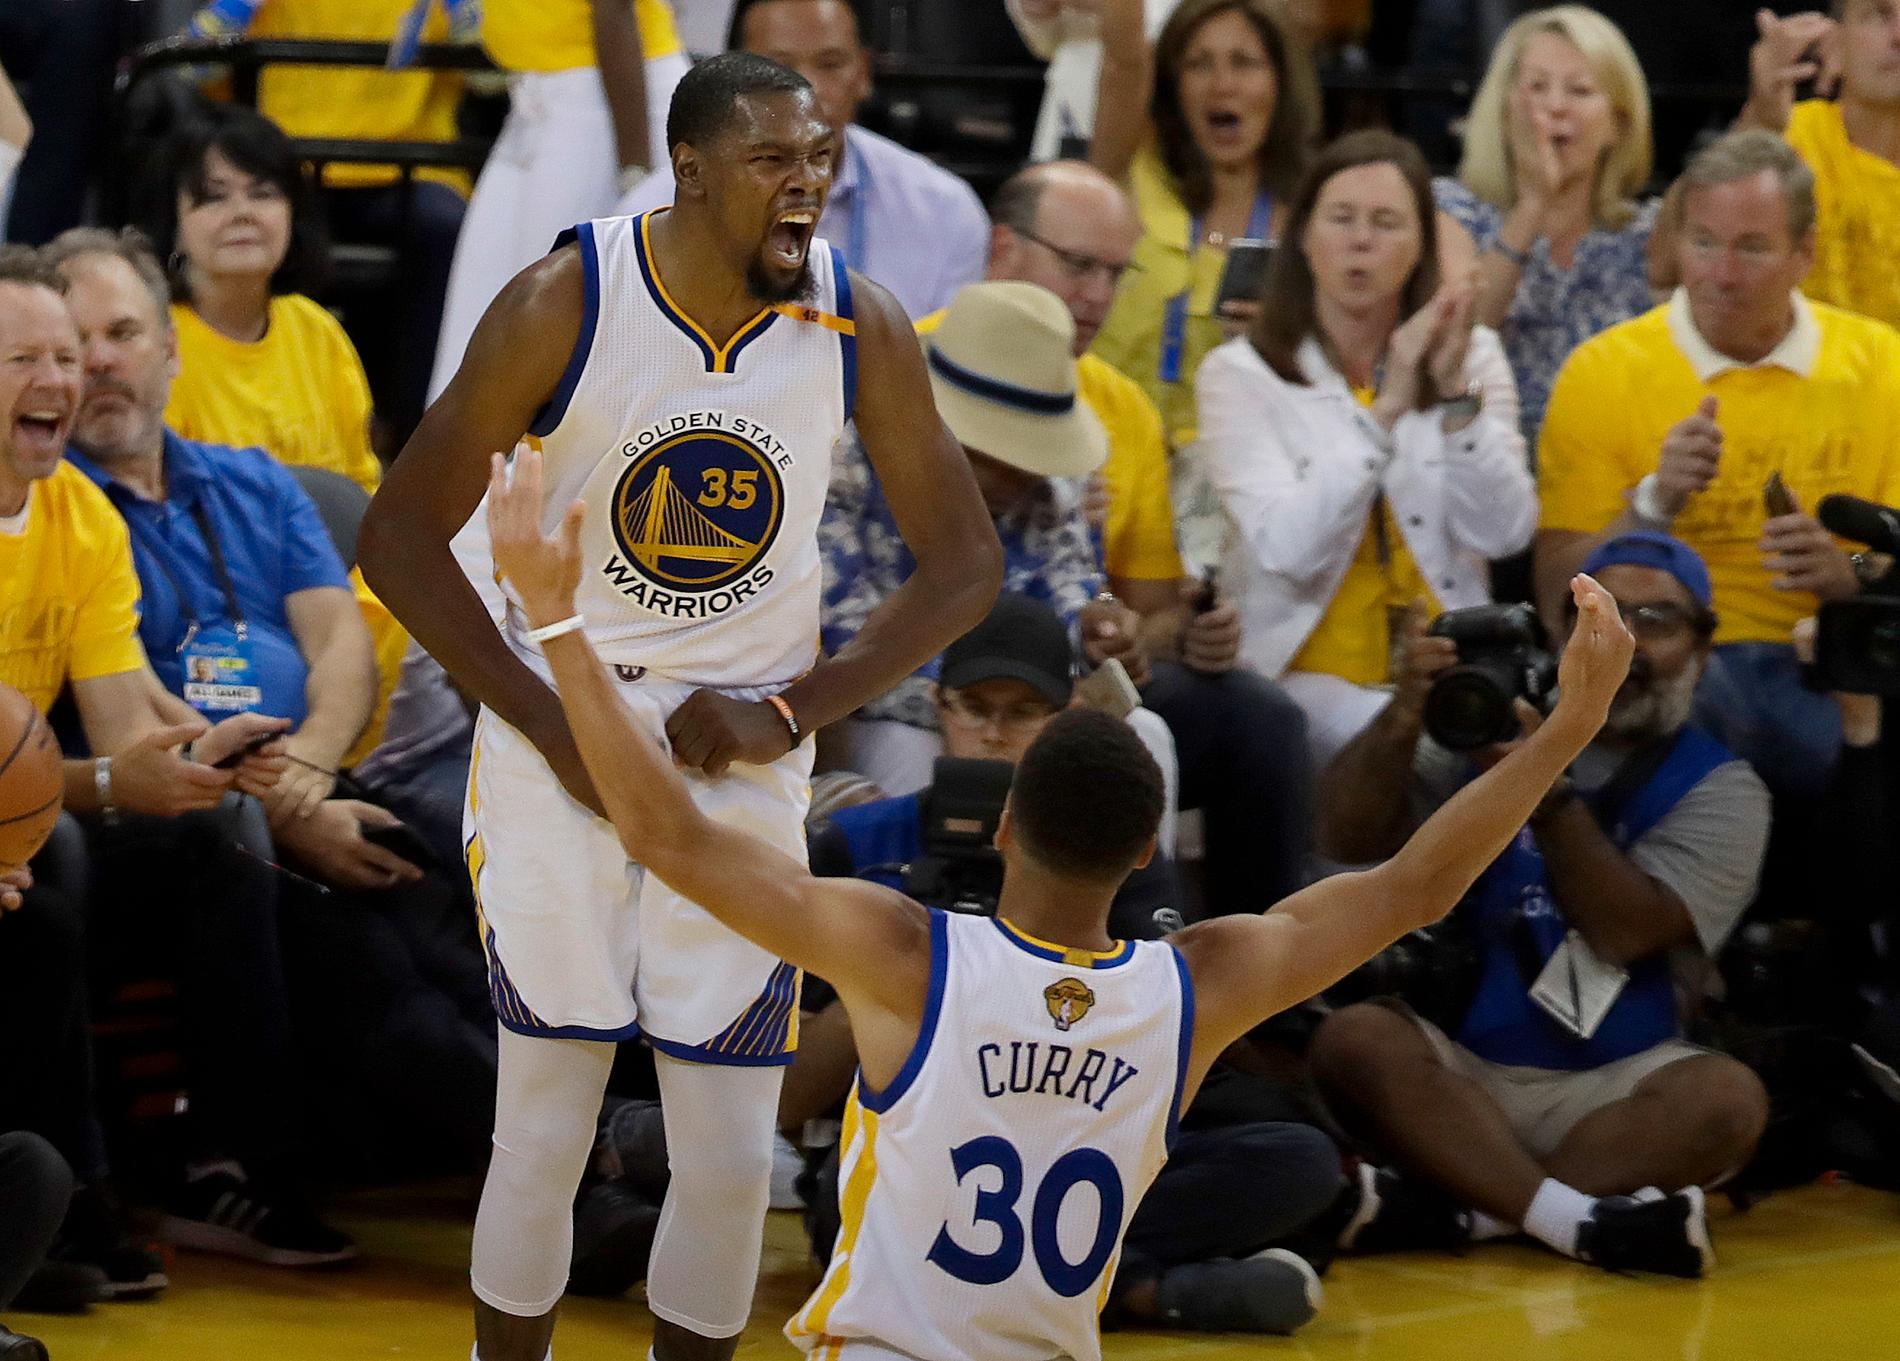 Golden States forward Kevin Durant firar poäng under matchen med Stephen Curry.